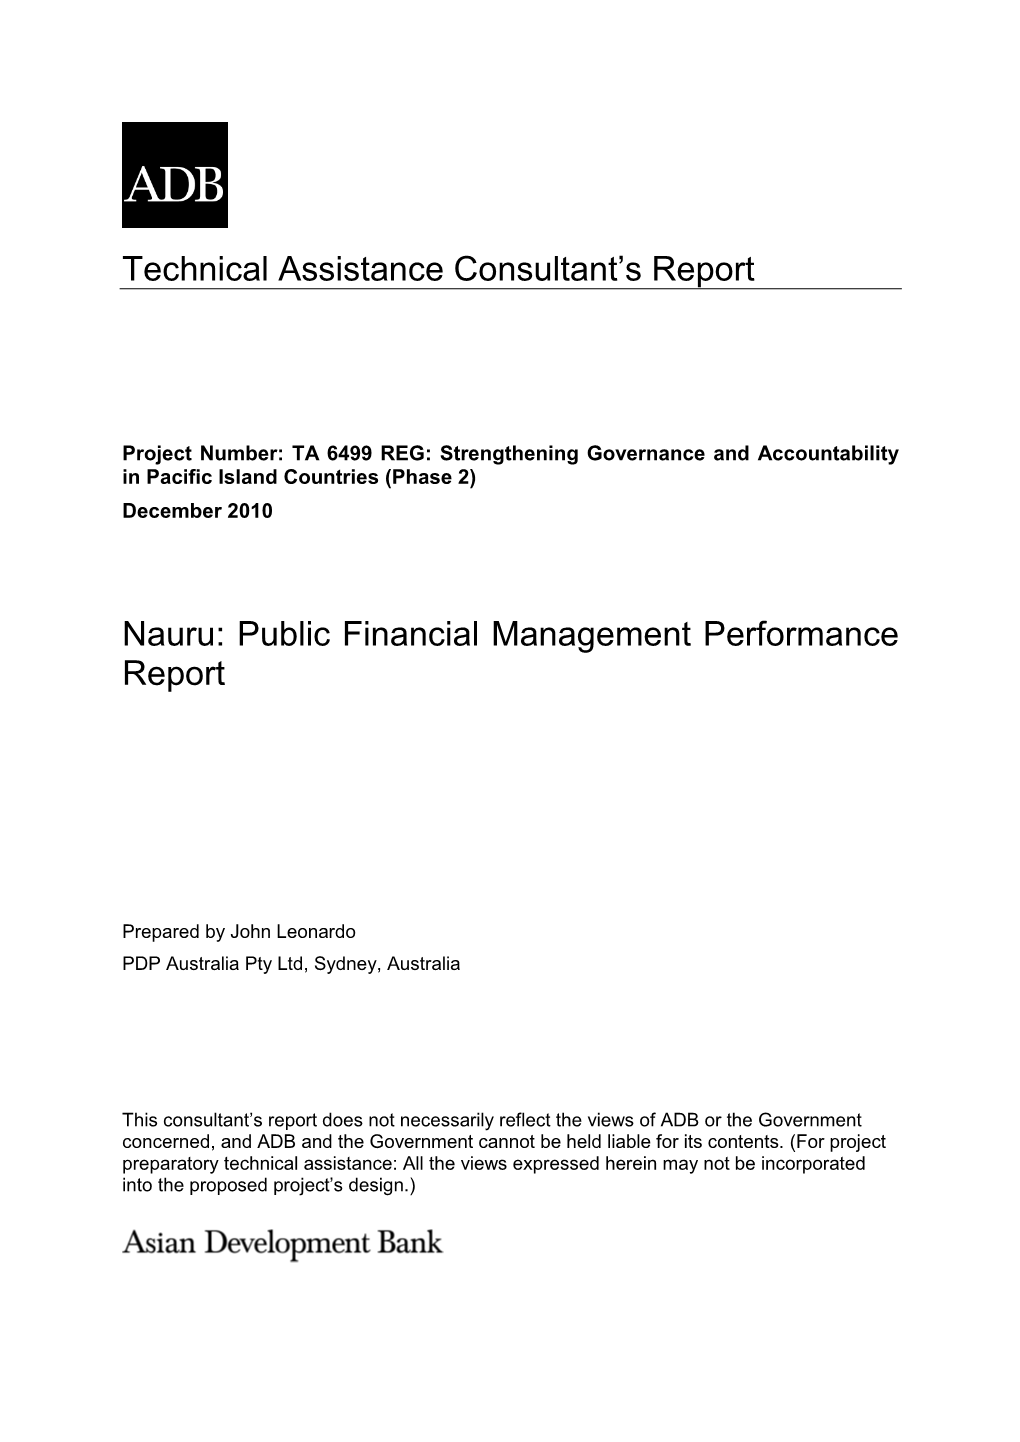 Technical Assistance Consultant's Report Nauru: Public Financial Management Performance Report